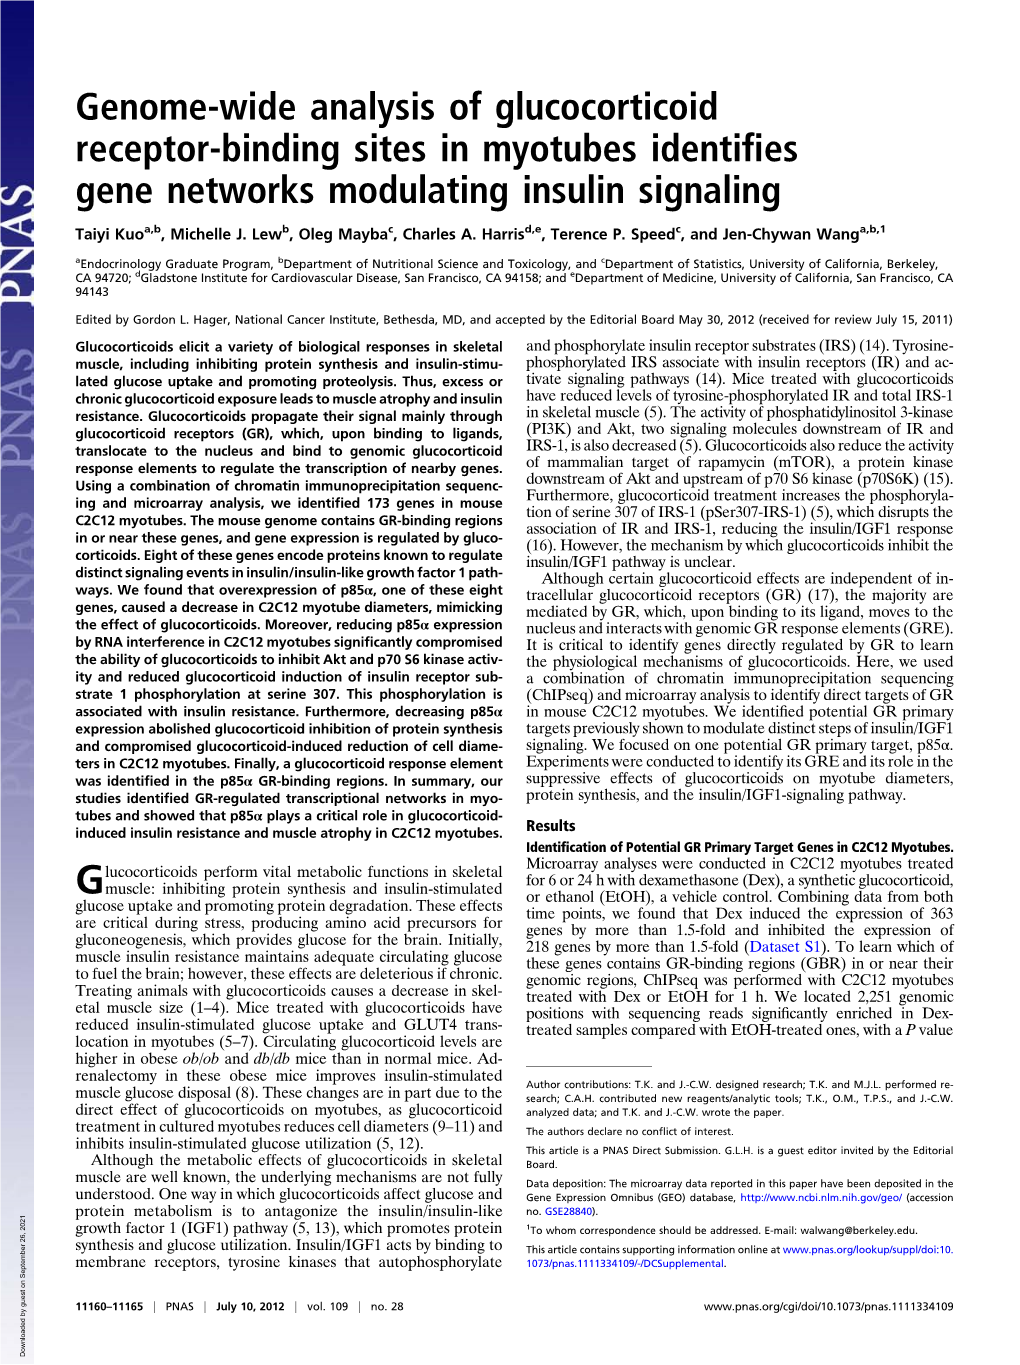 Genome-Wide Analysis of Glucocorticoid Receptor-Binding Sites in Myotubes Identiﬁes Gene Networks Modulating Insulin Signaling